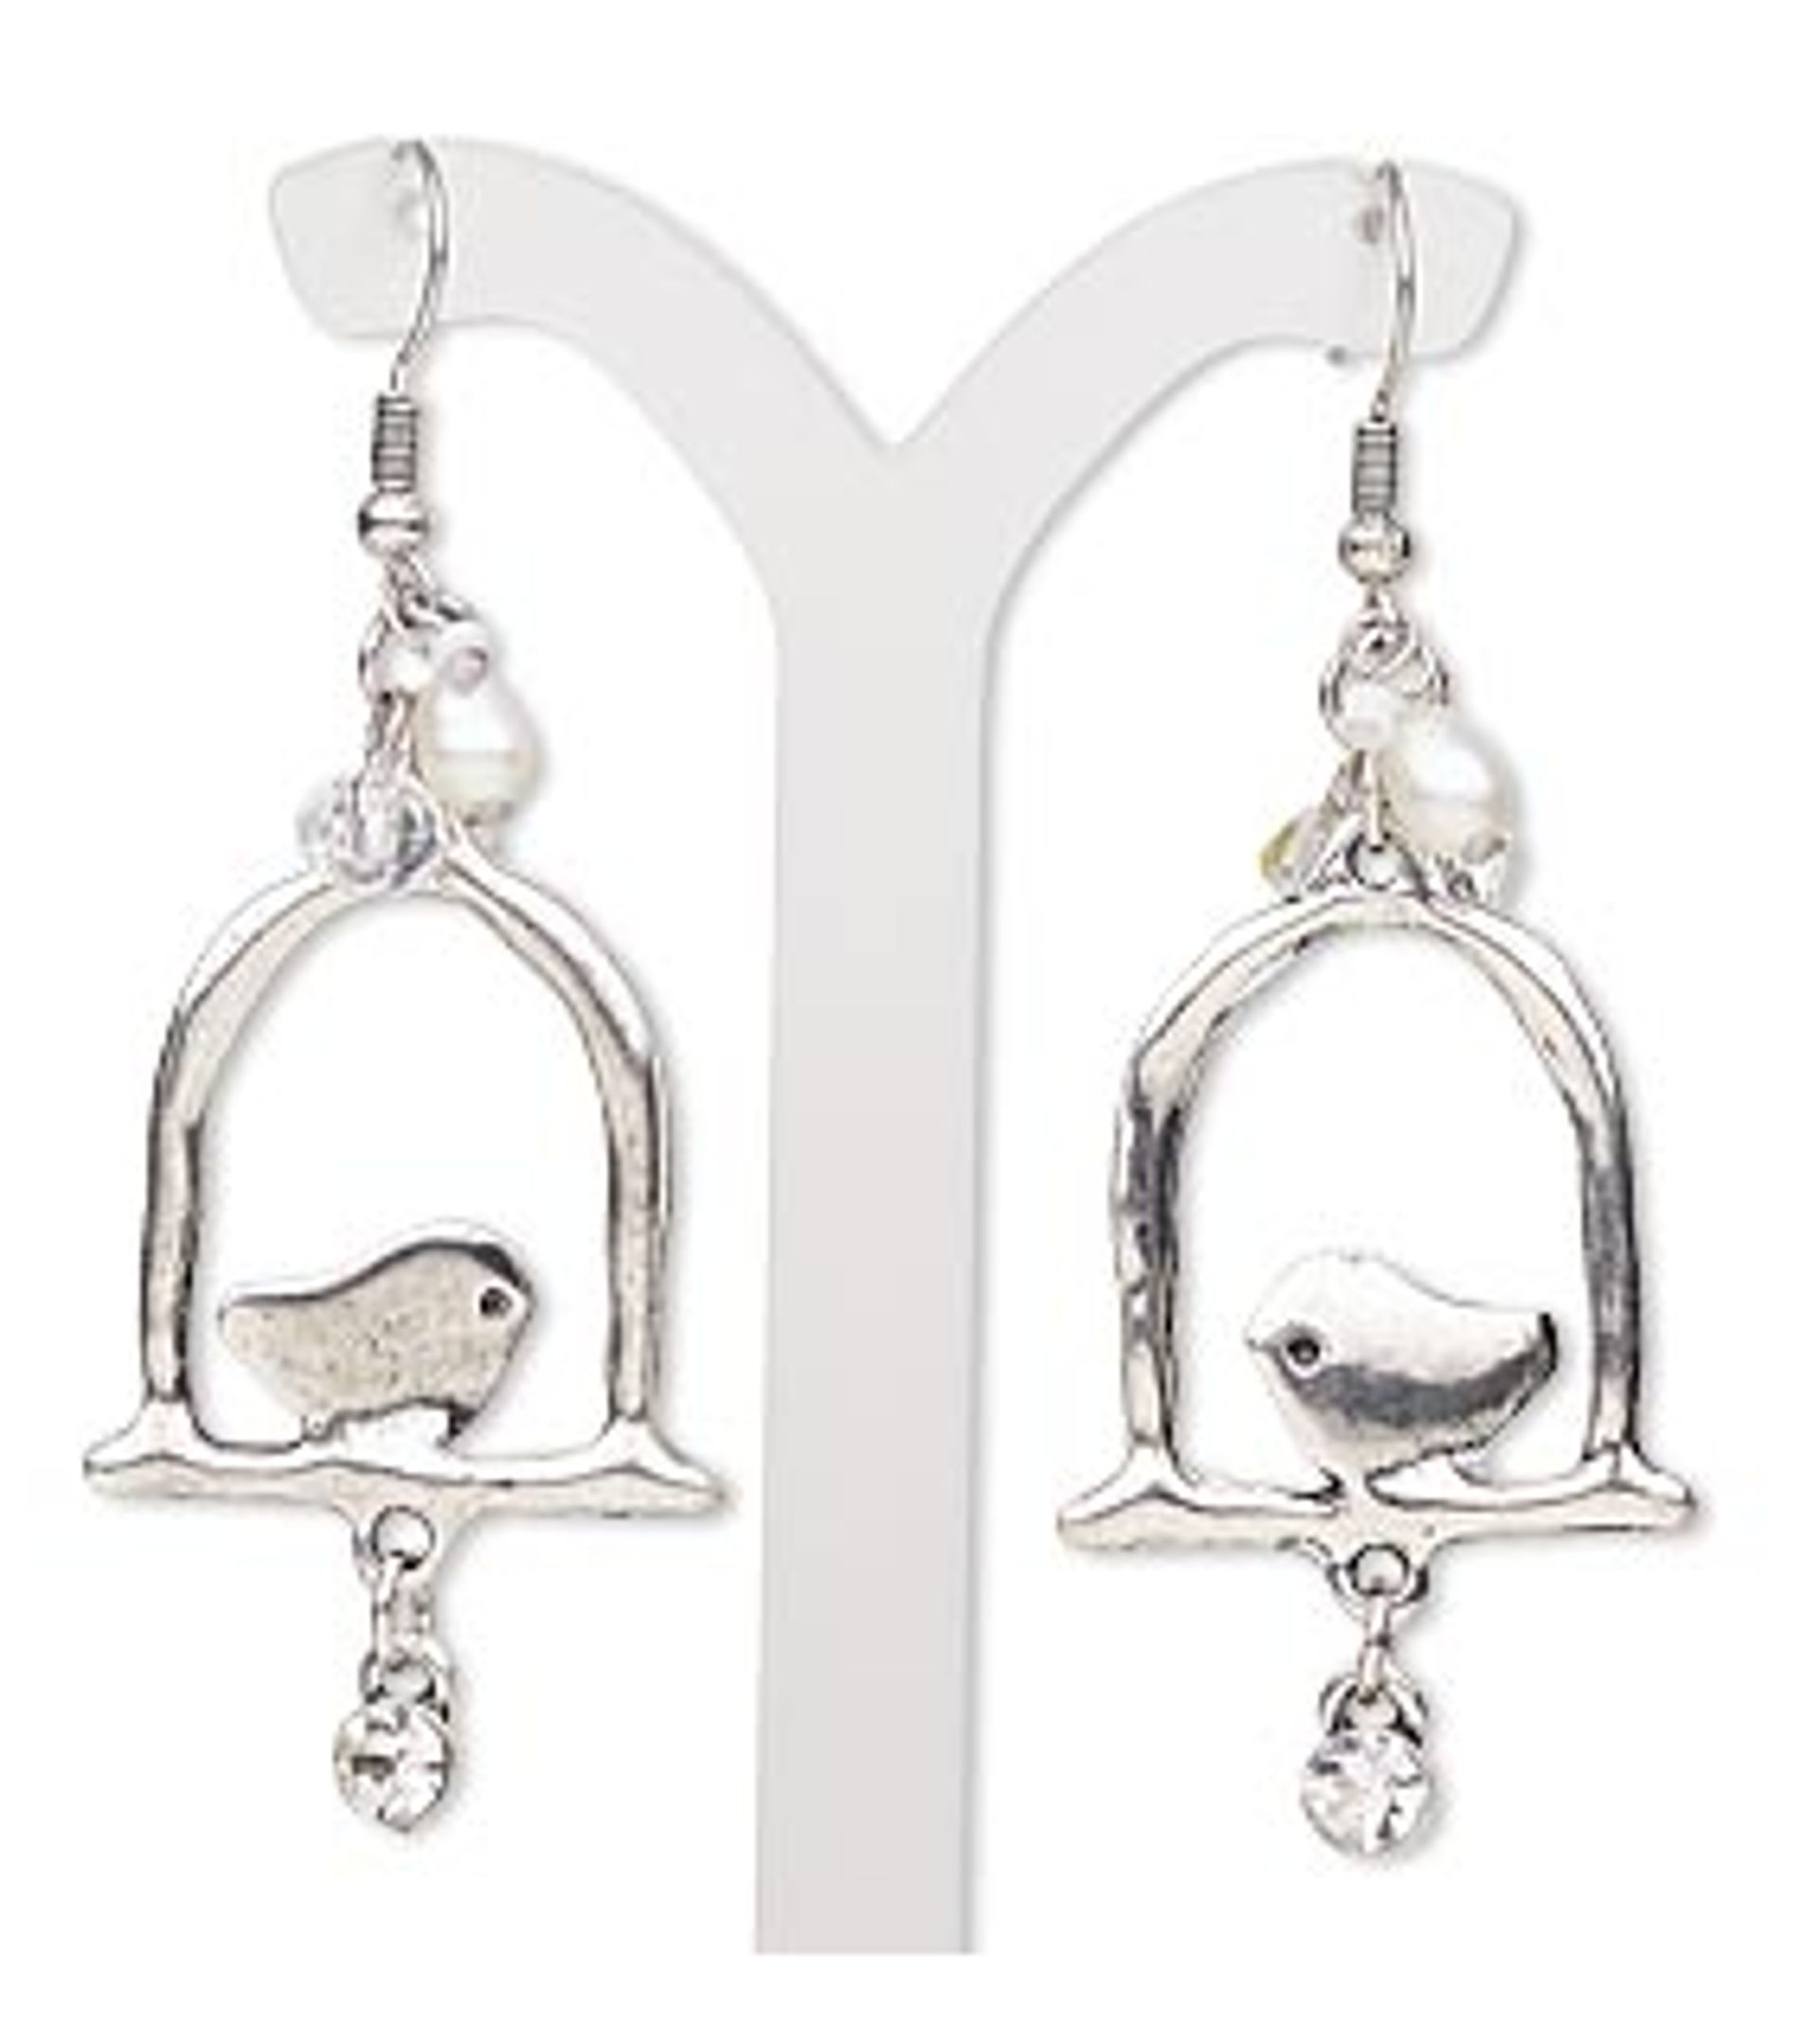 Earrings - Bird on Perch w/Charms by Indigo Desert Ranch - Jewelry